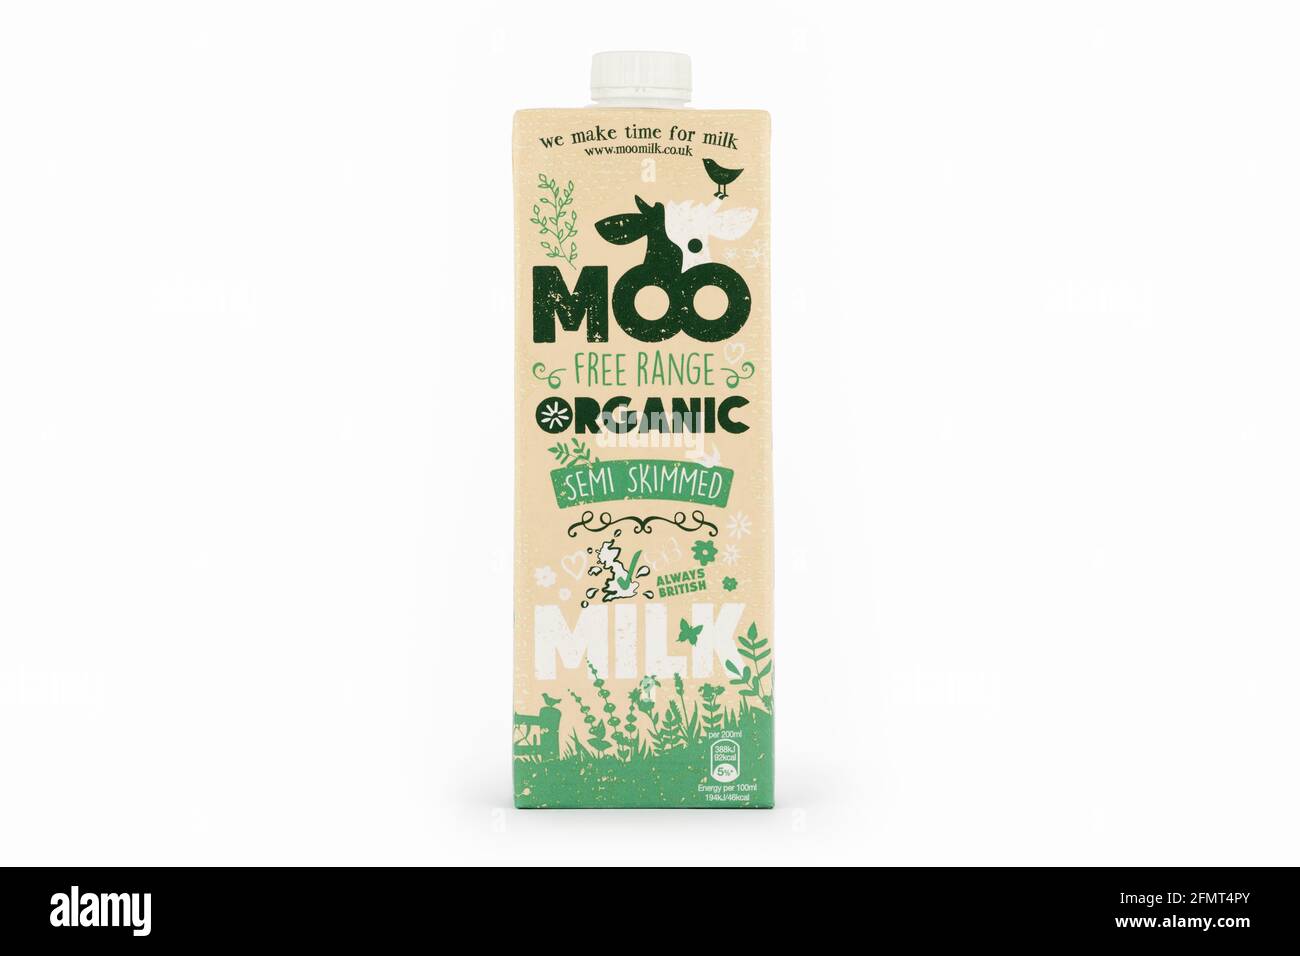 A bottle of Moo free range organic semi-skimmed milk shot on a white background. Stock Photo